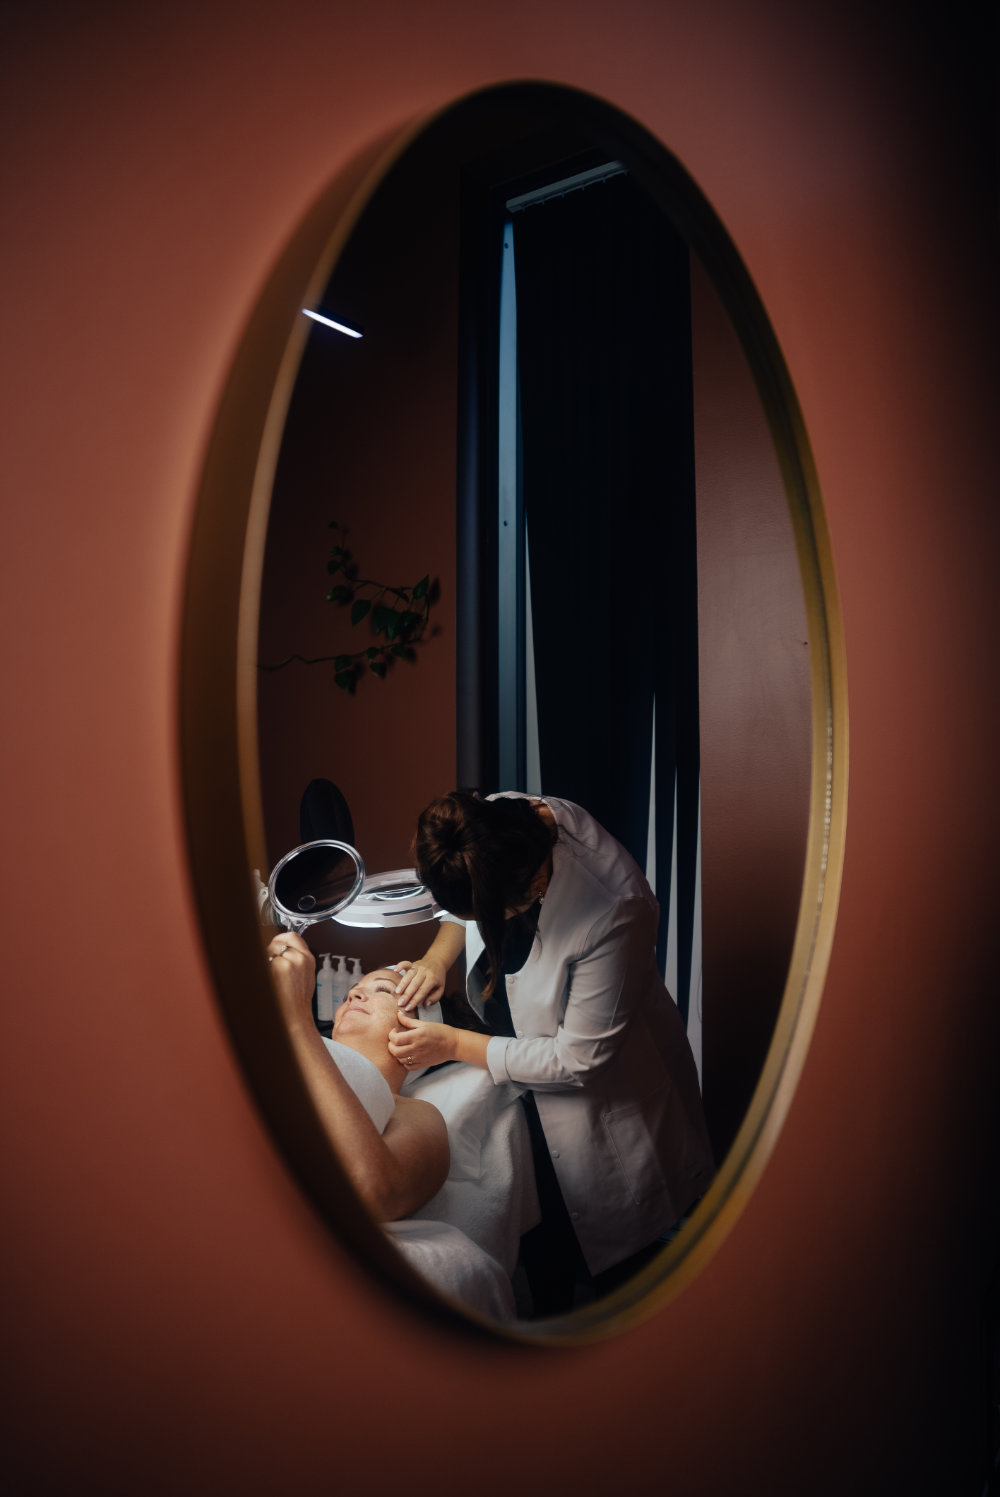 Pasient ser på ansikt med speil, Dermatolog behandler ansikt